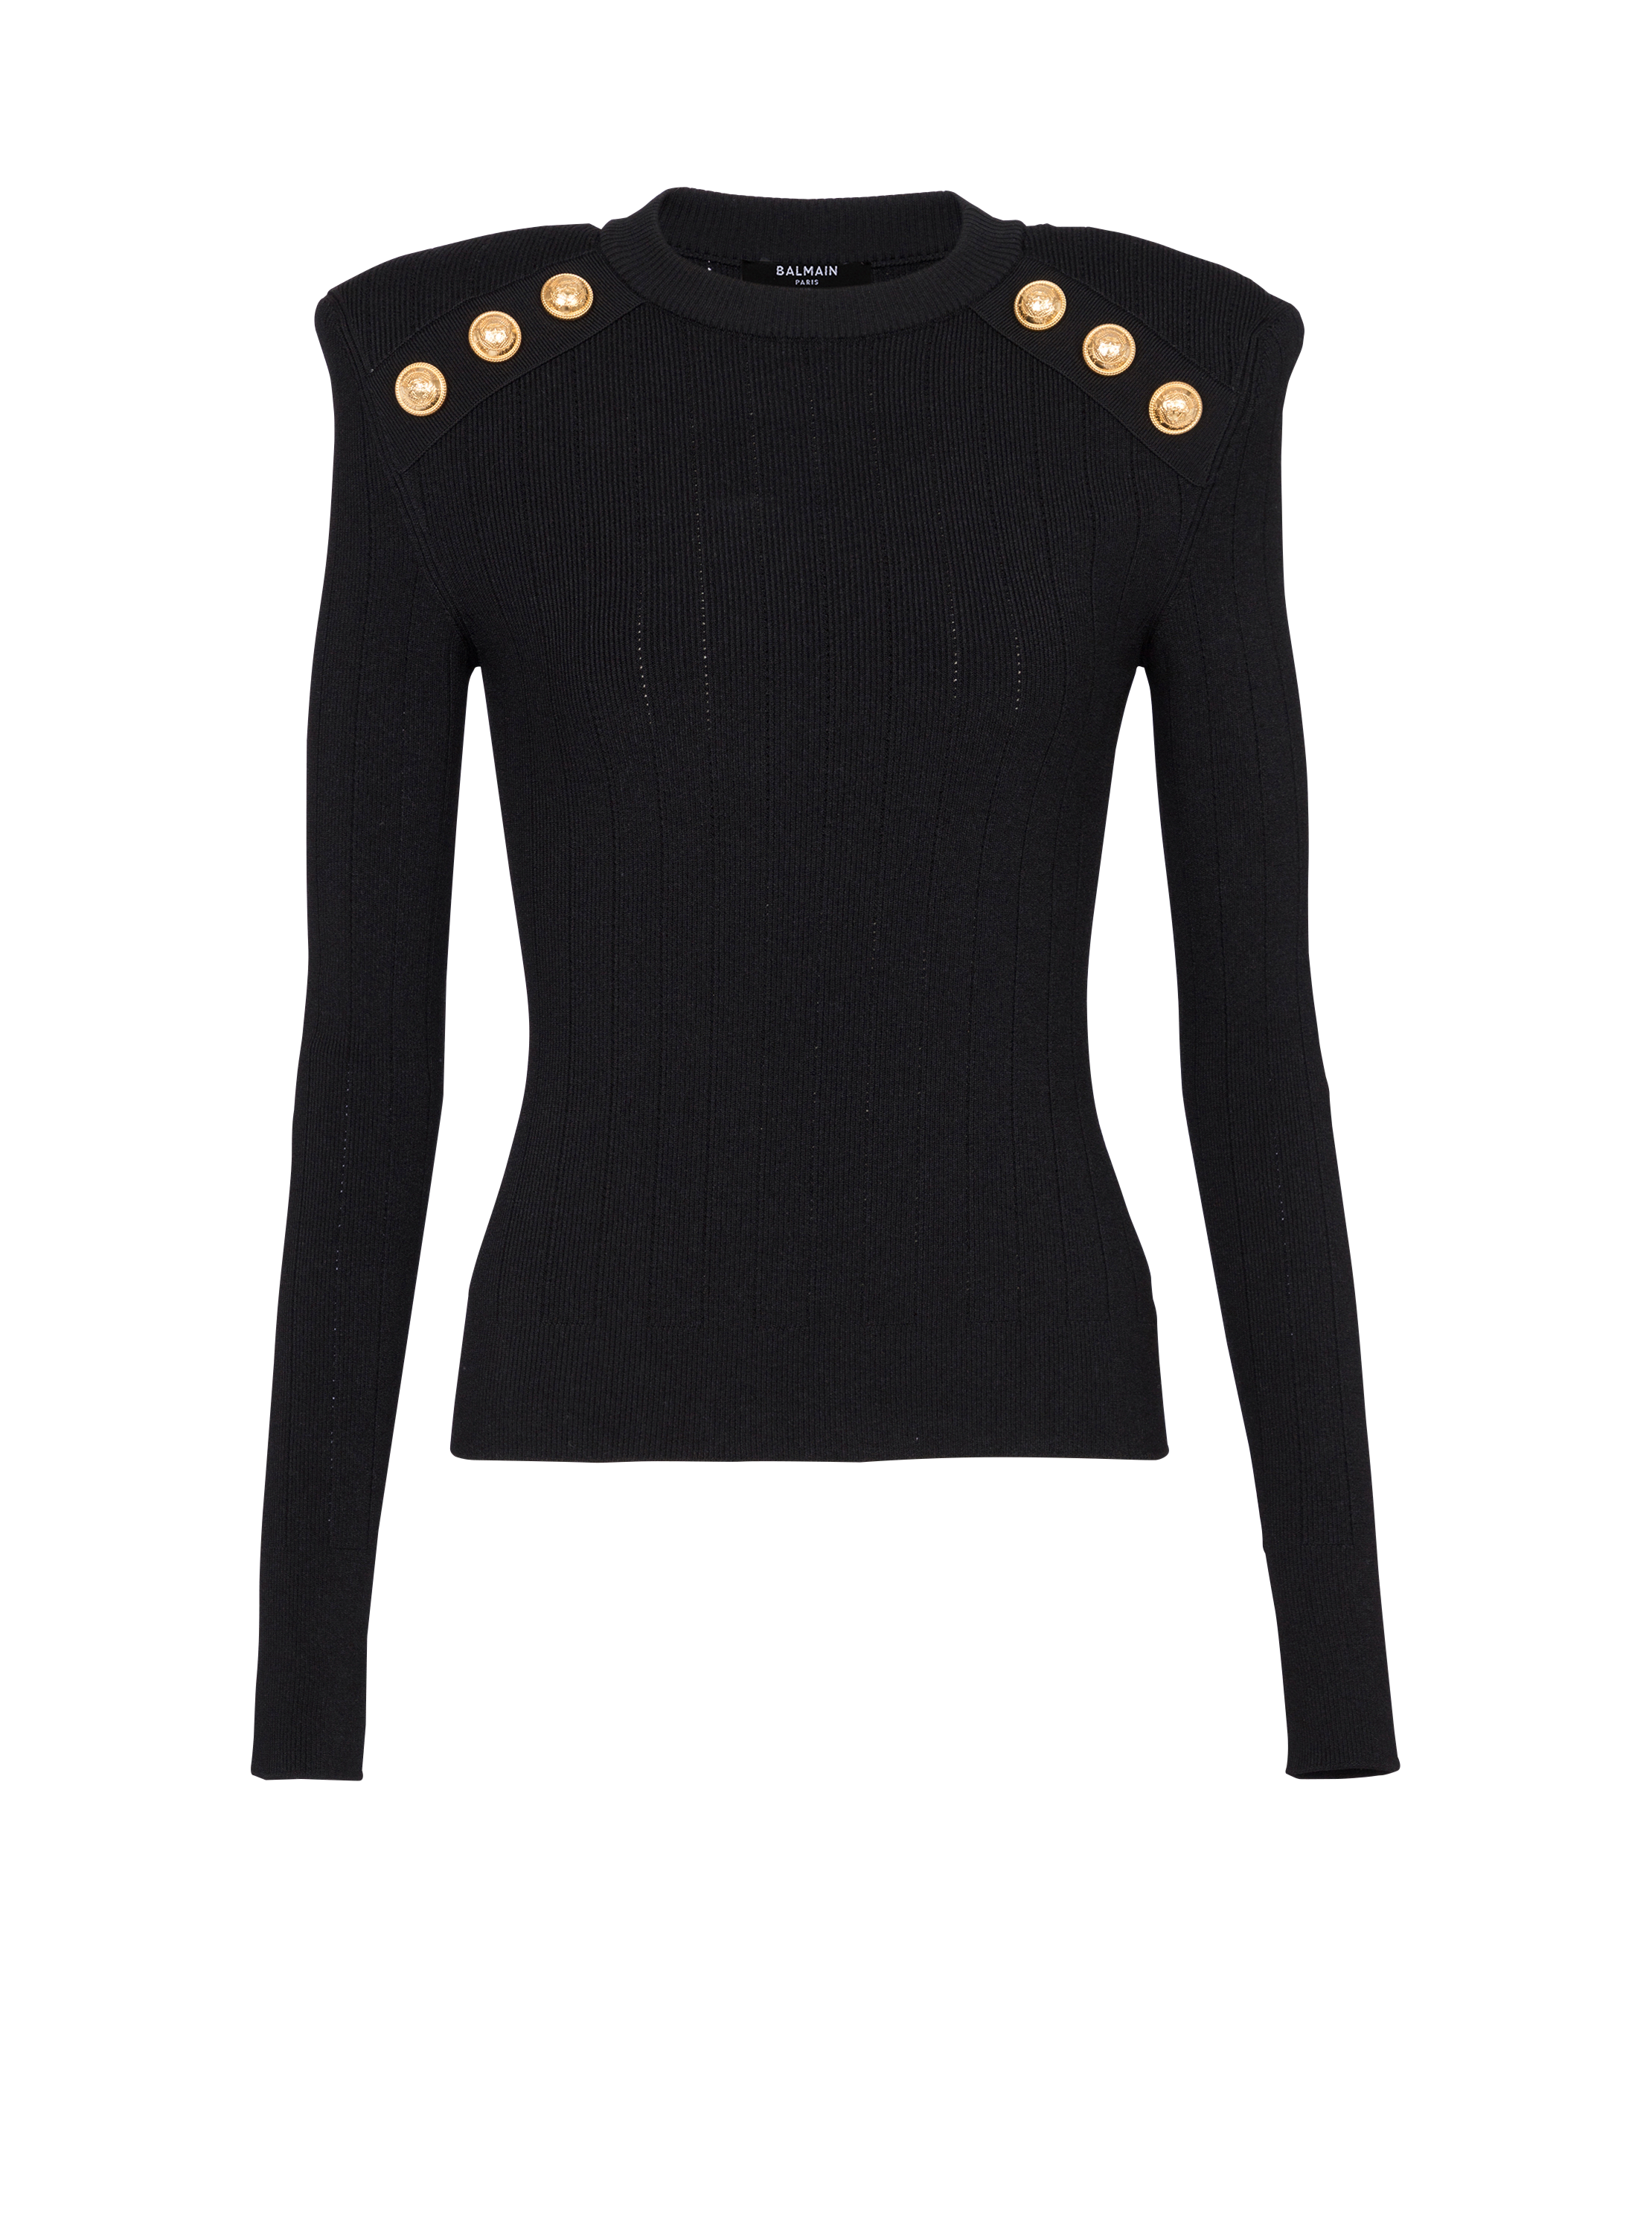 Fine knit 6-button jumper, black, hi-res